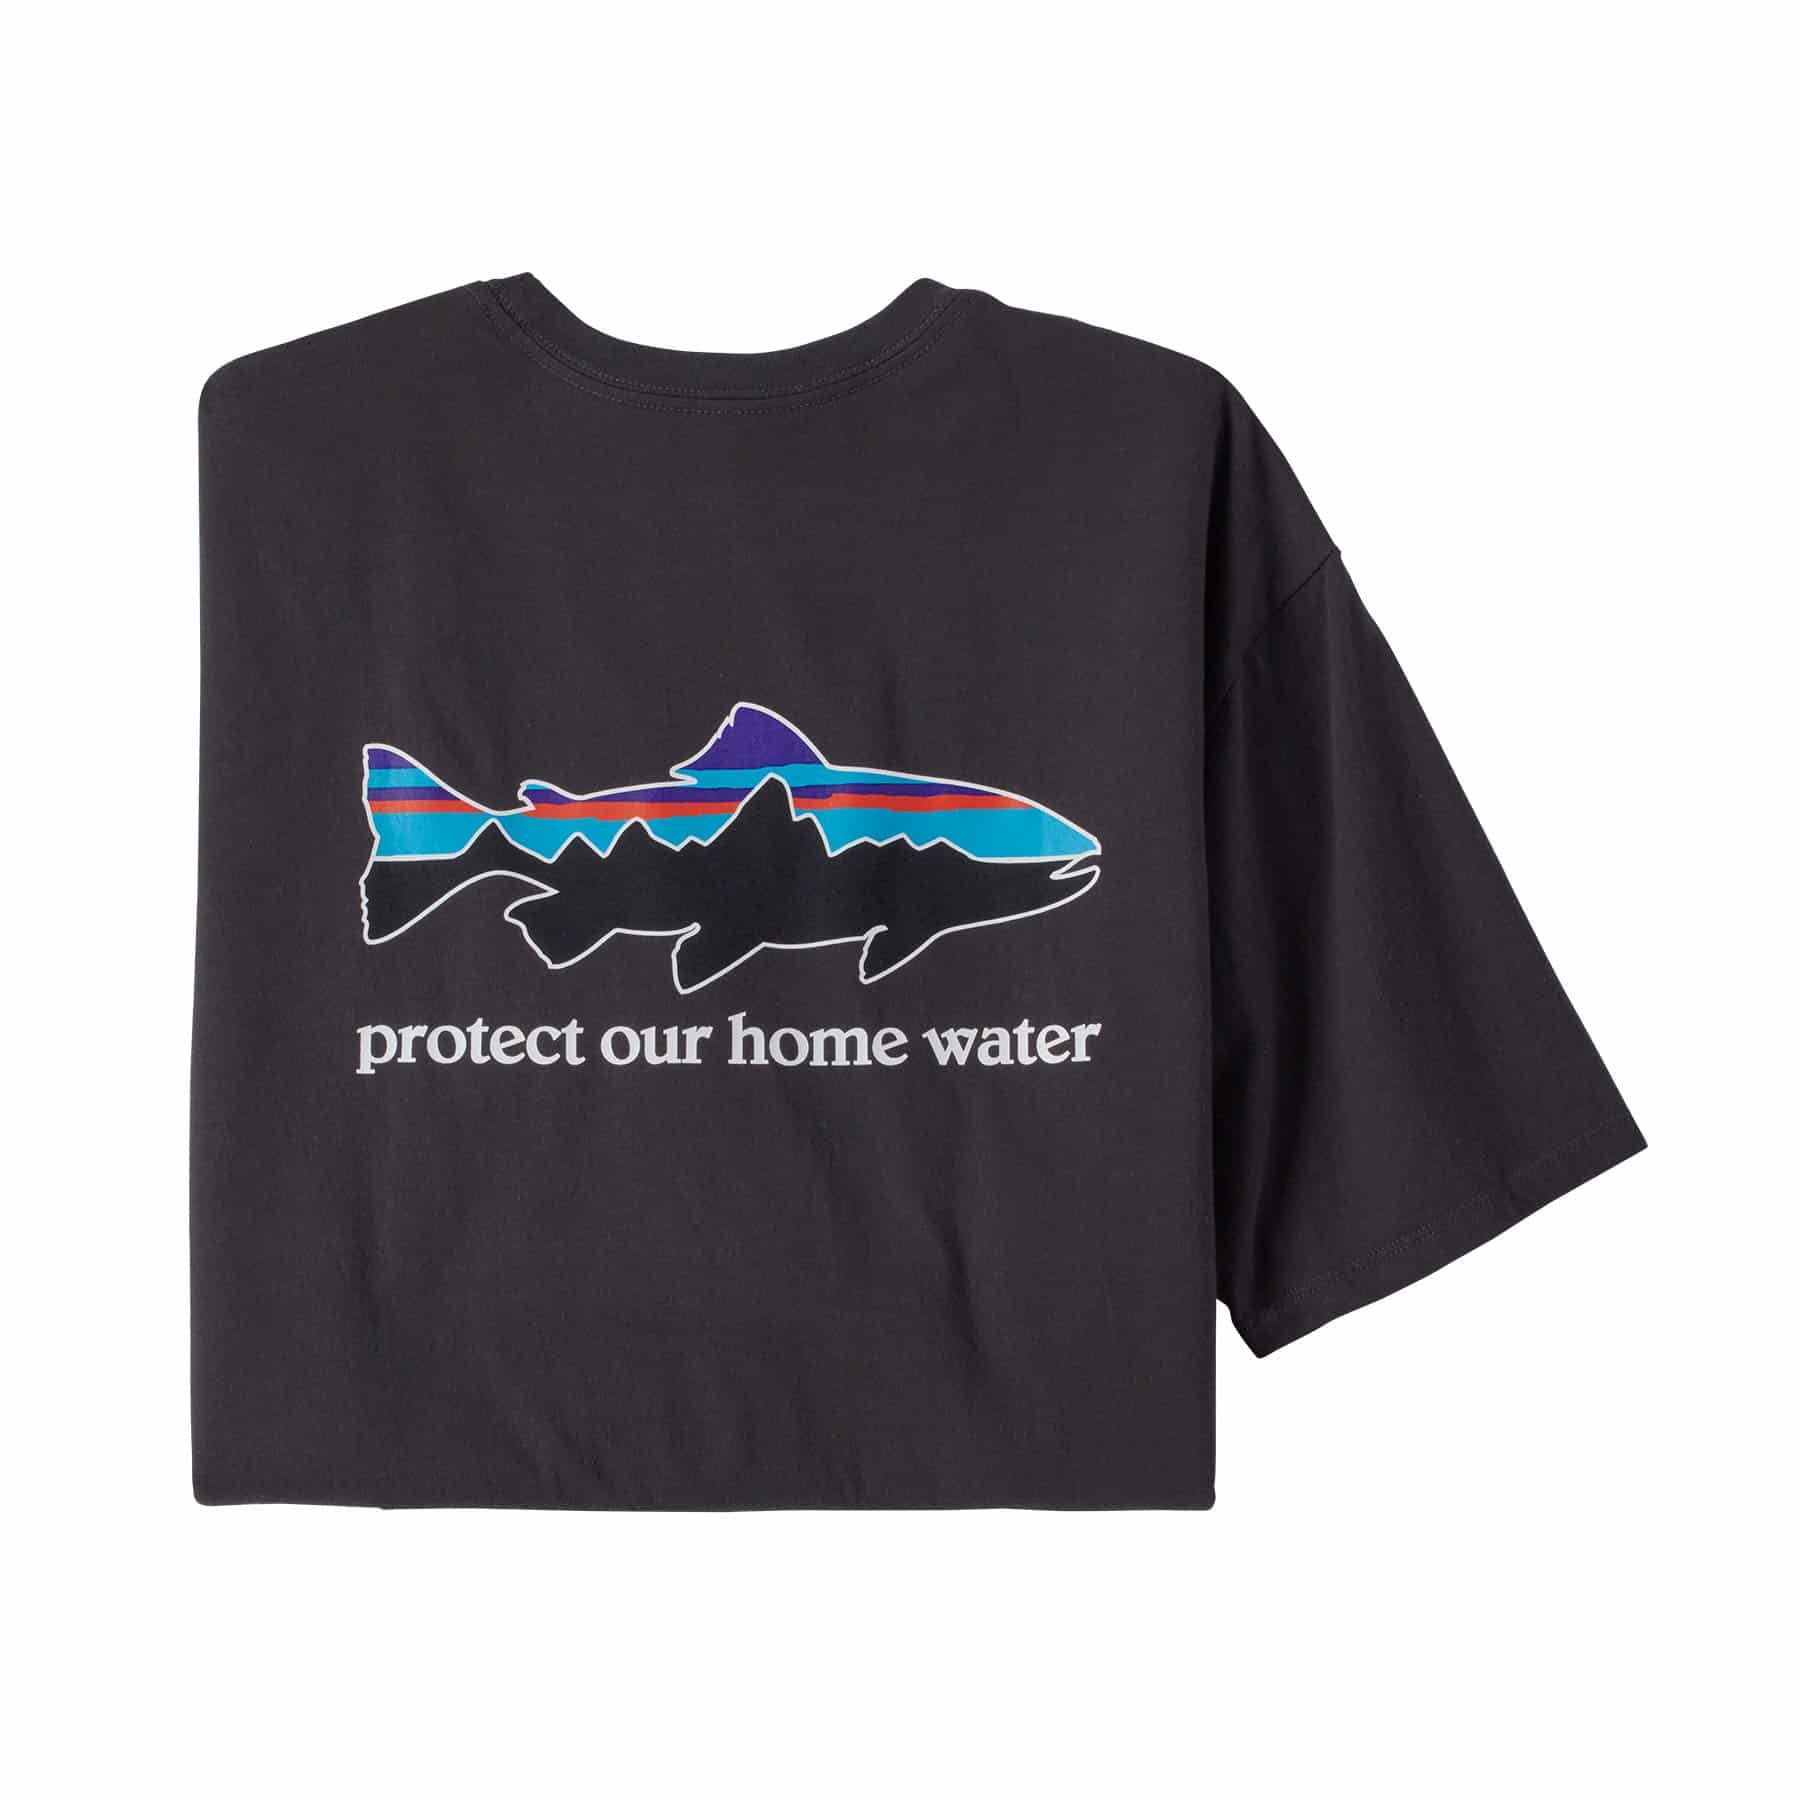 Patagonia Men’s Home Water Trout Organic T-Shirt - Fin & Game